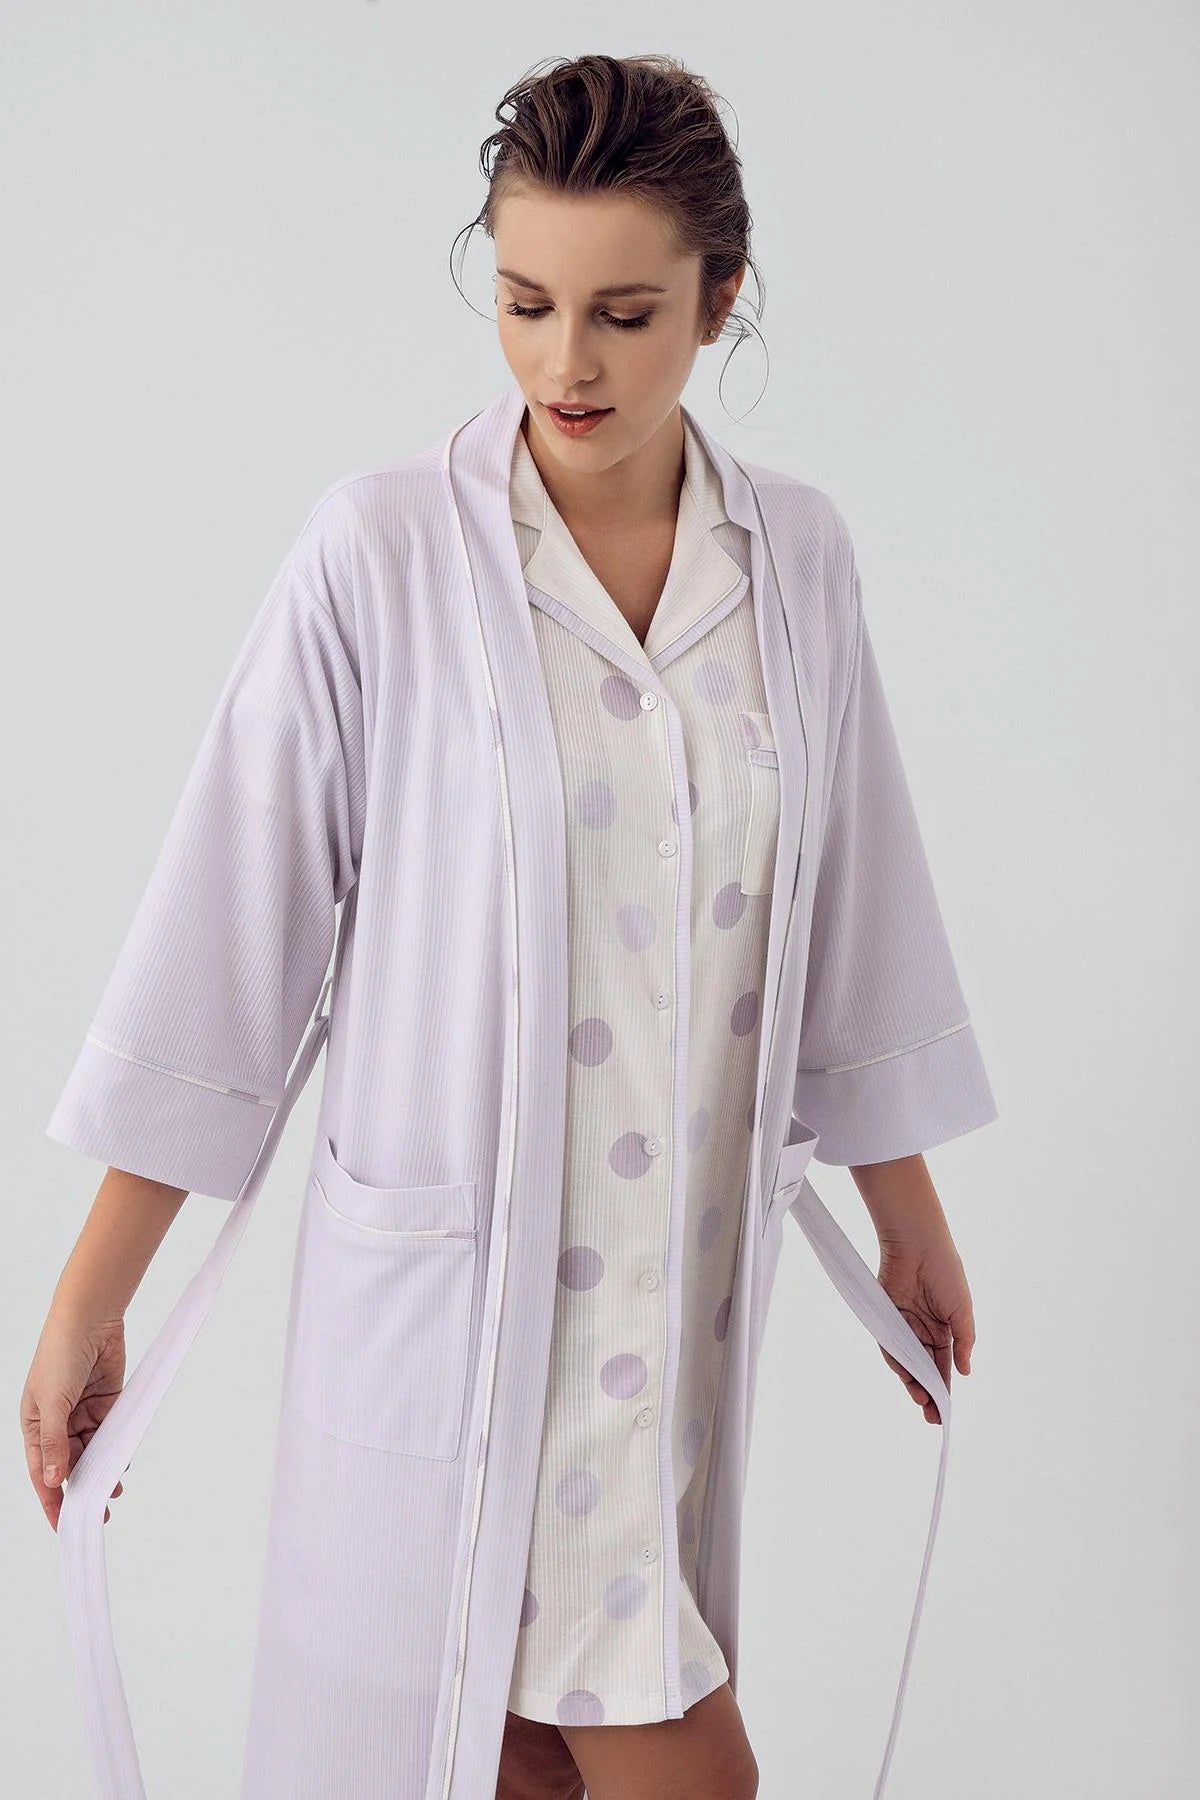 Shopymommy 16410 Polka Dot Maternity & Nursing Nightgown With Robe Lilac